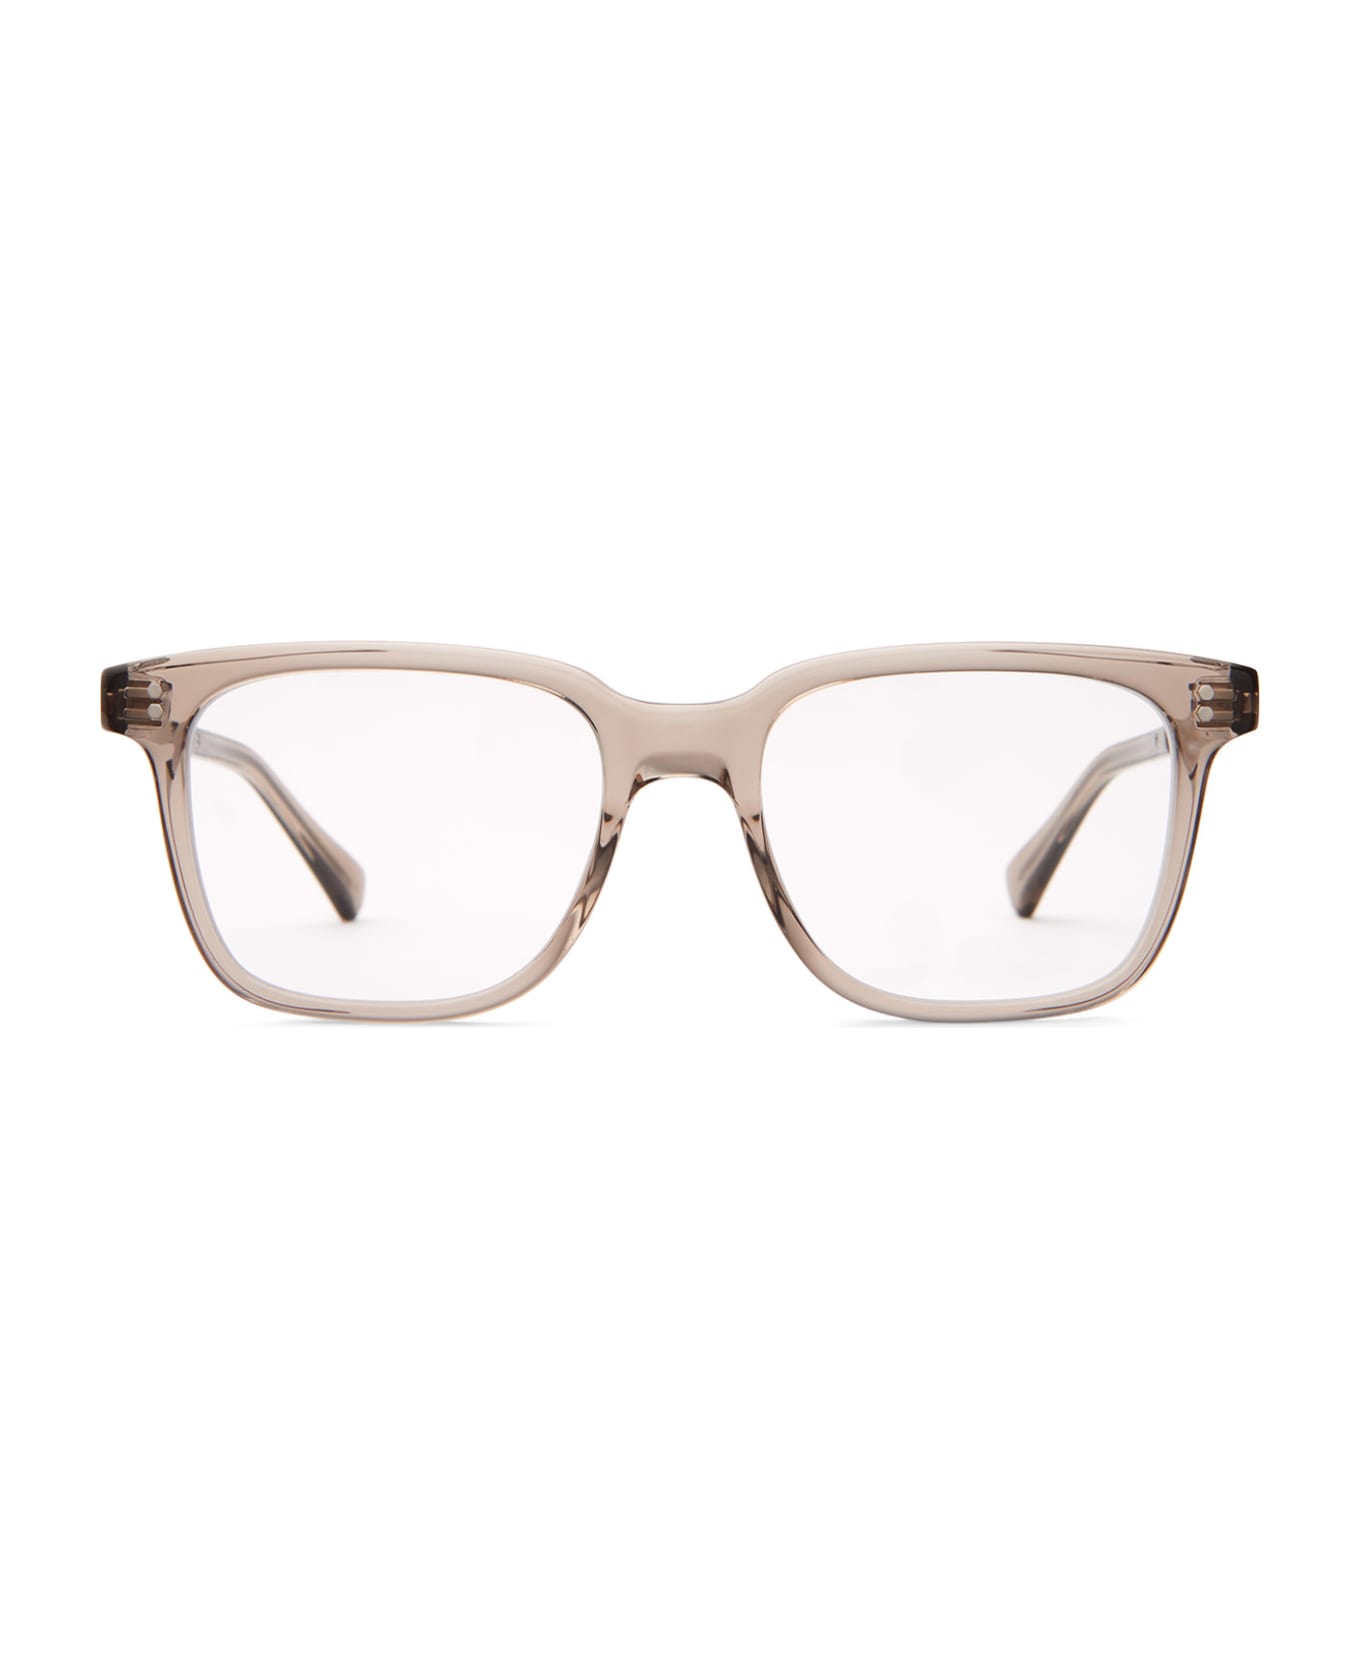 Mr. Leight Lautner C Grey Crystal-pewter Glasses - Grey Crystal-Pewter